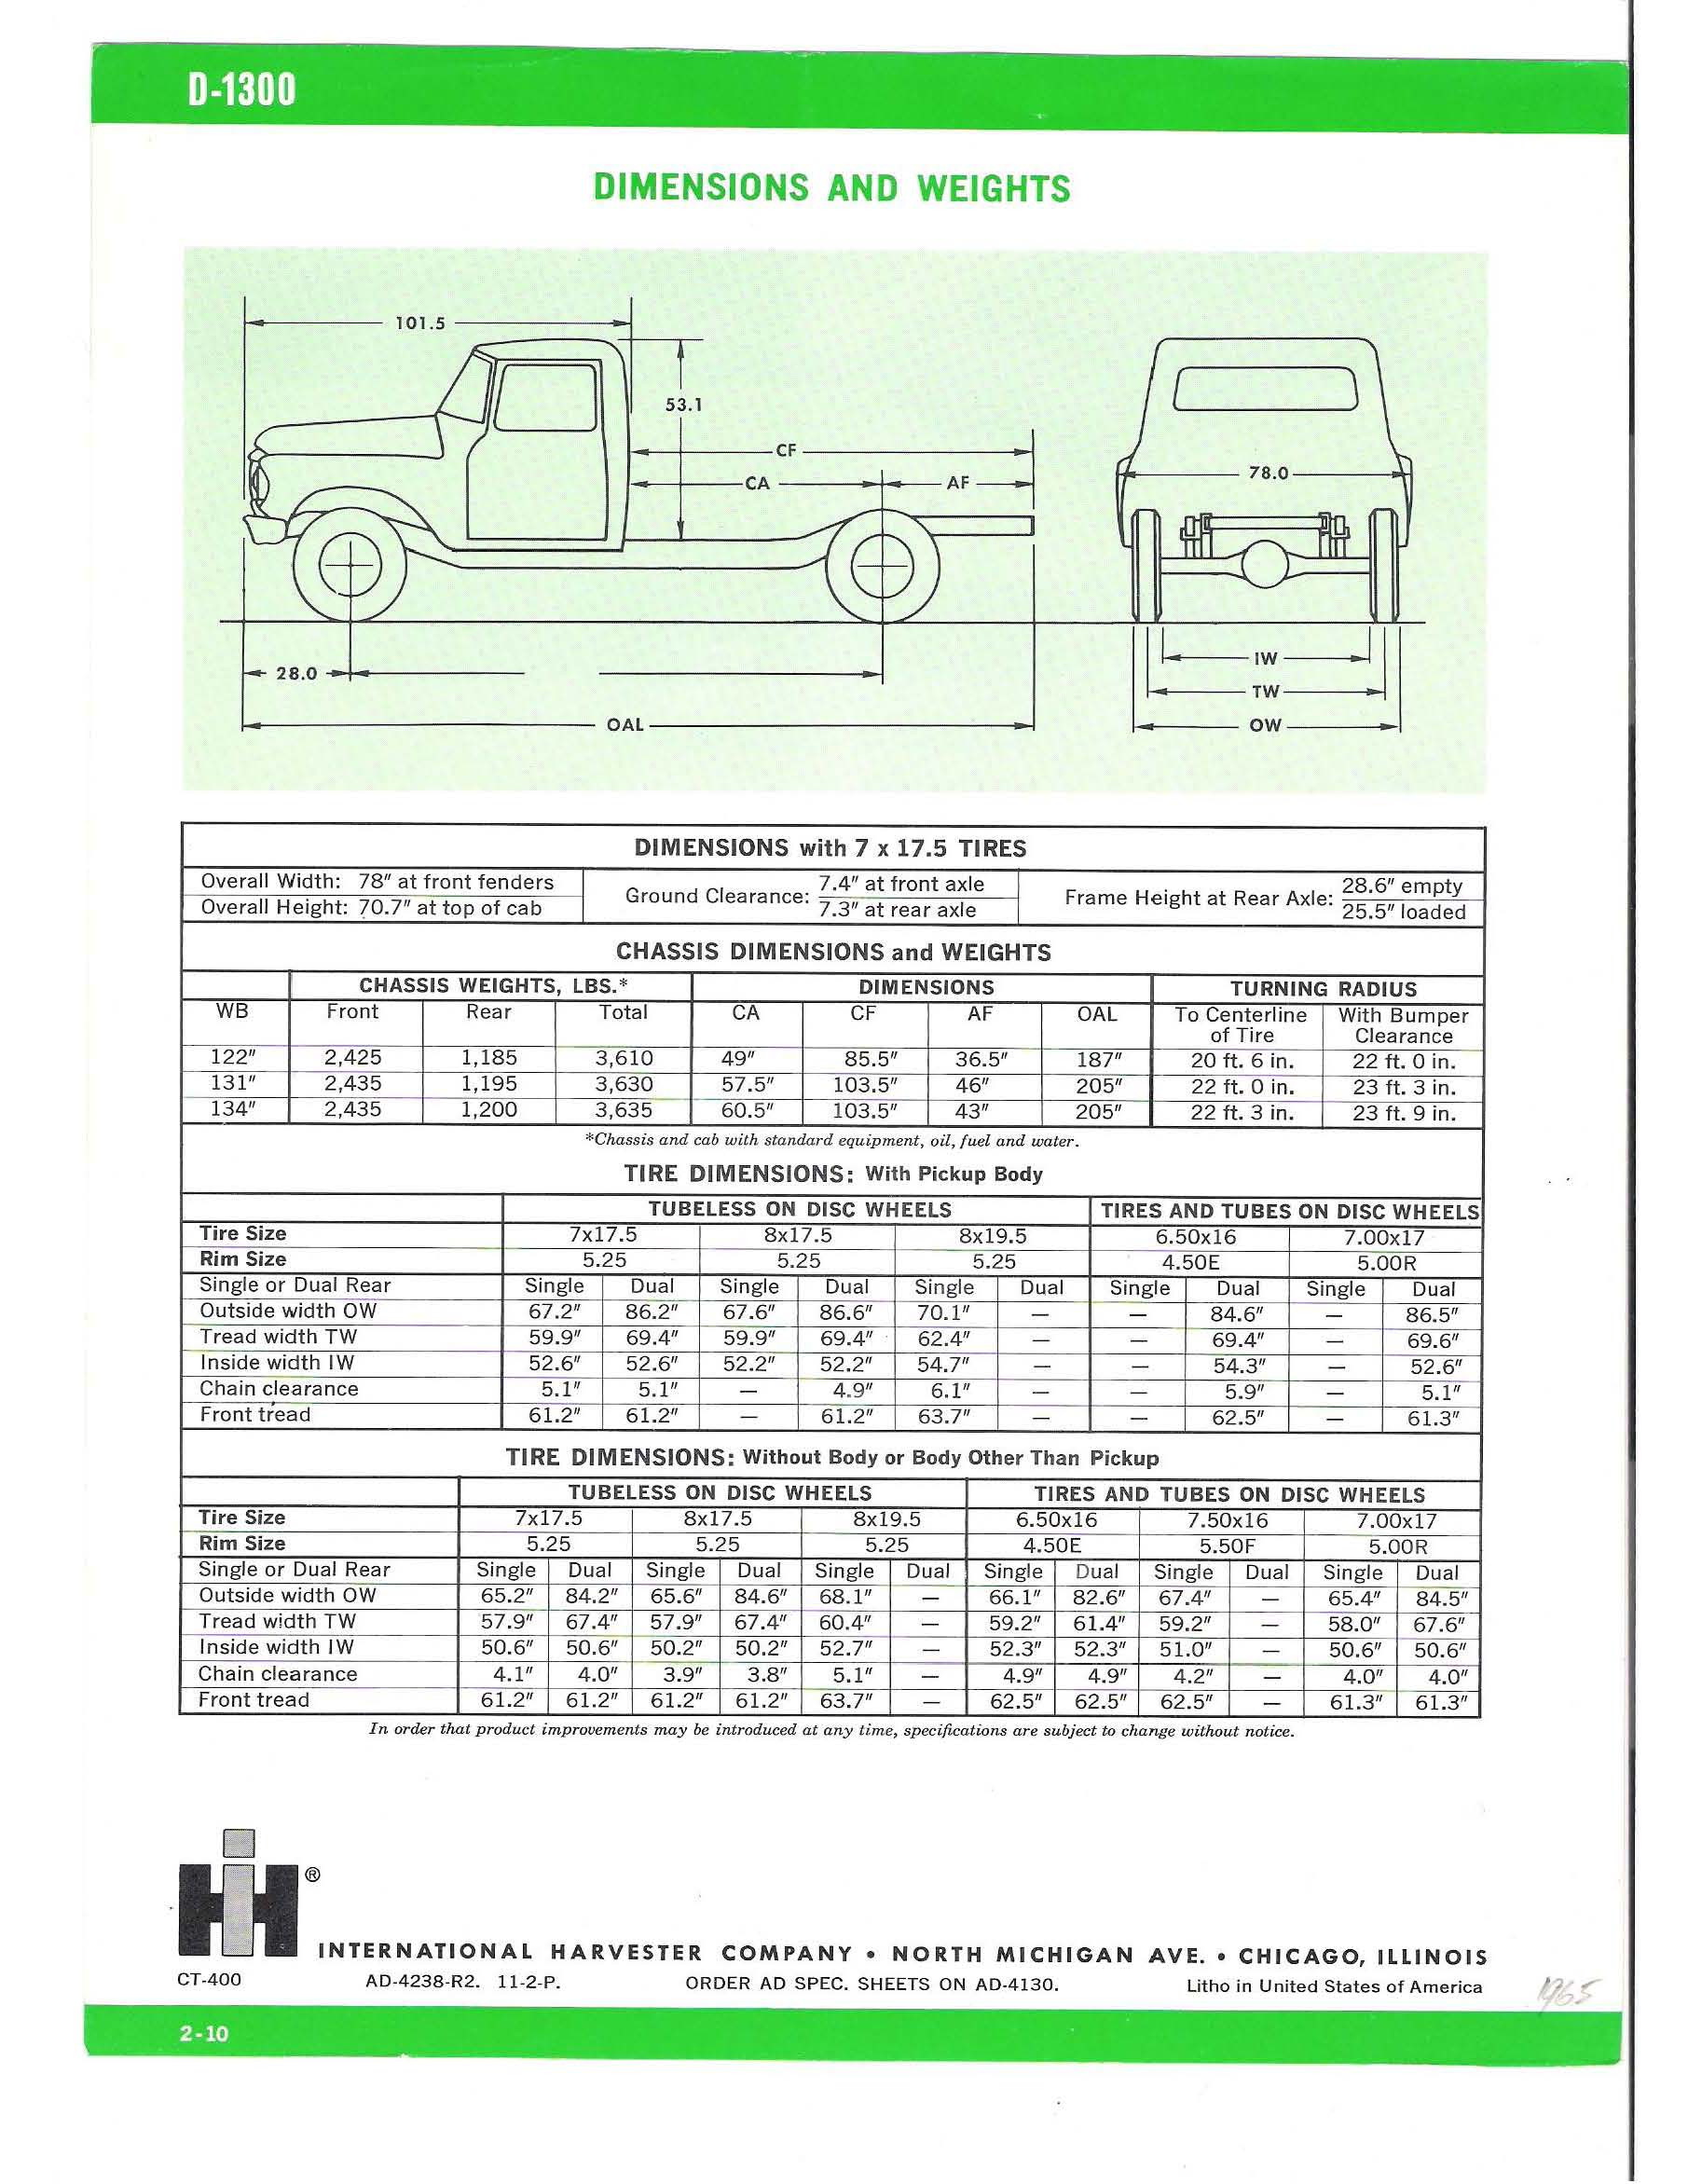 1965 International D-1300 Series Folder Page 2